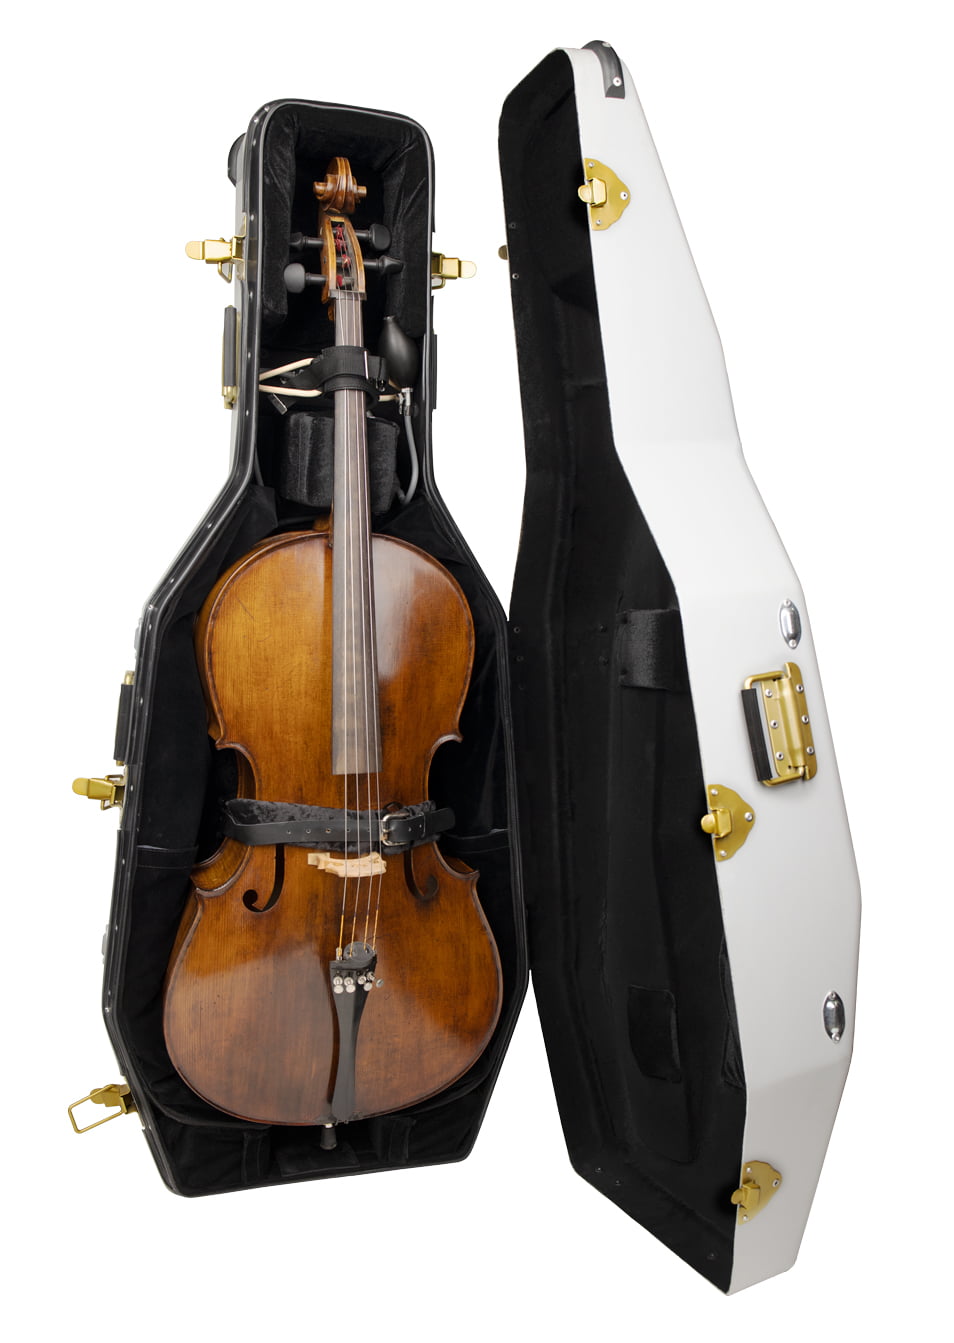 Kolsteins™ Uni-Air Cello Carrier (RENTAL)